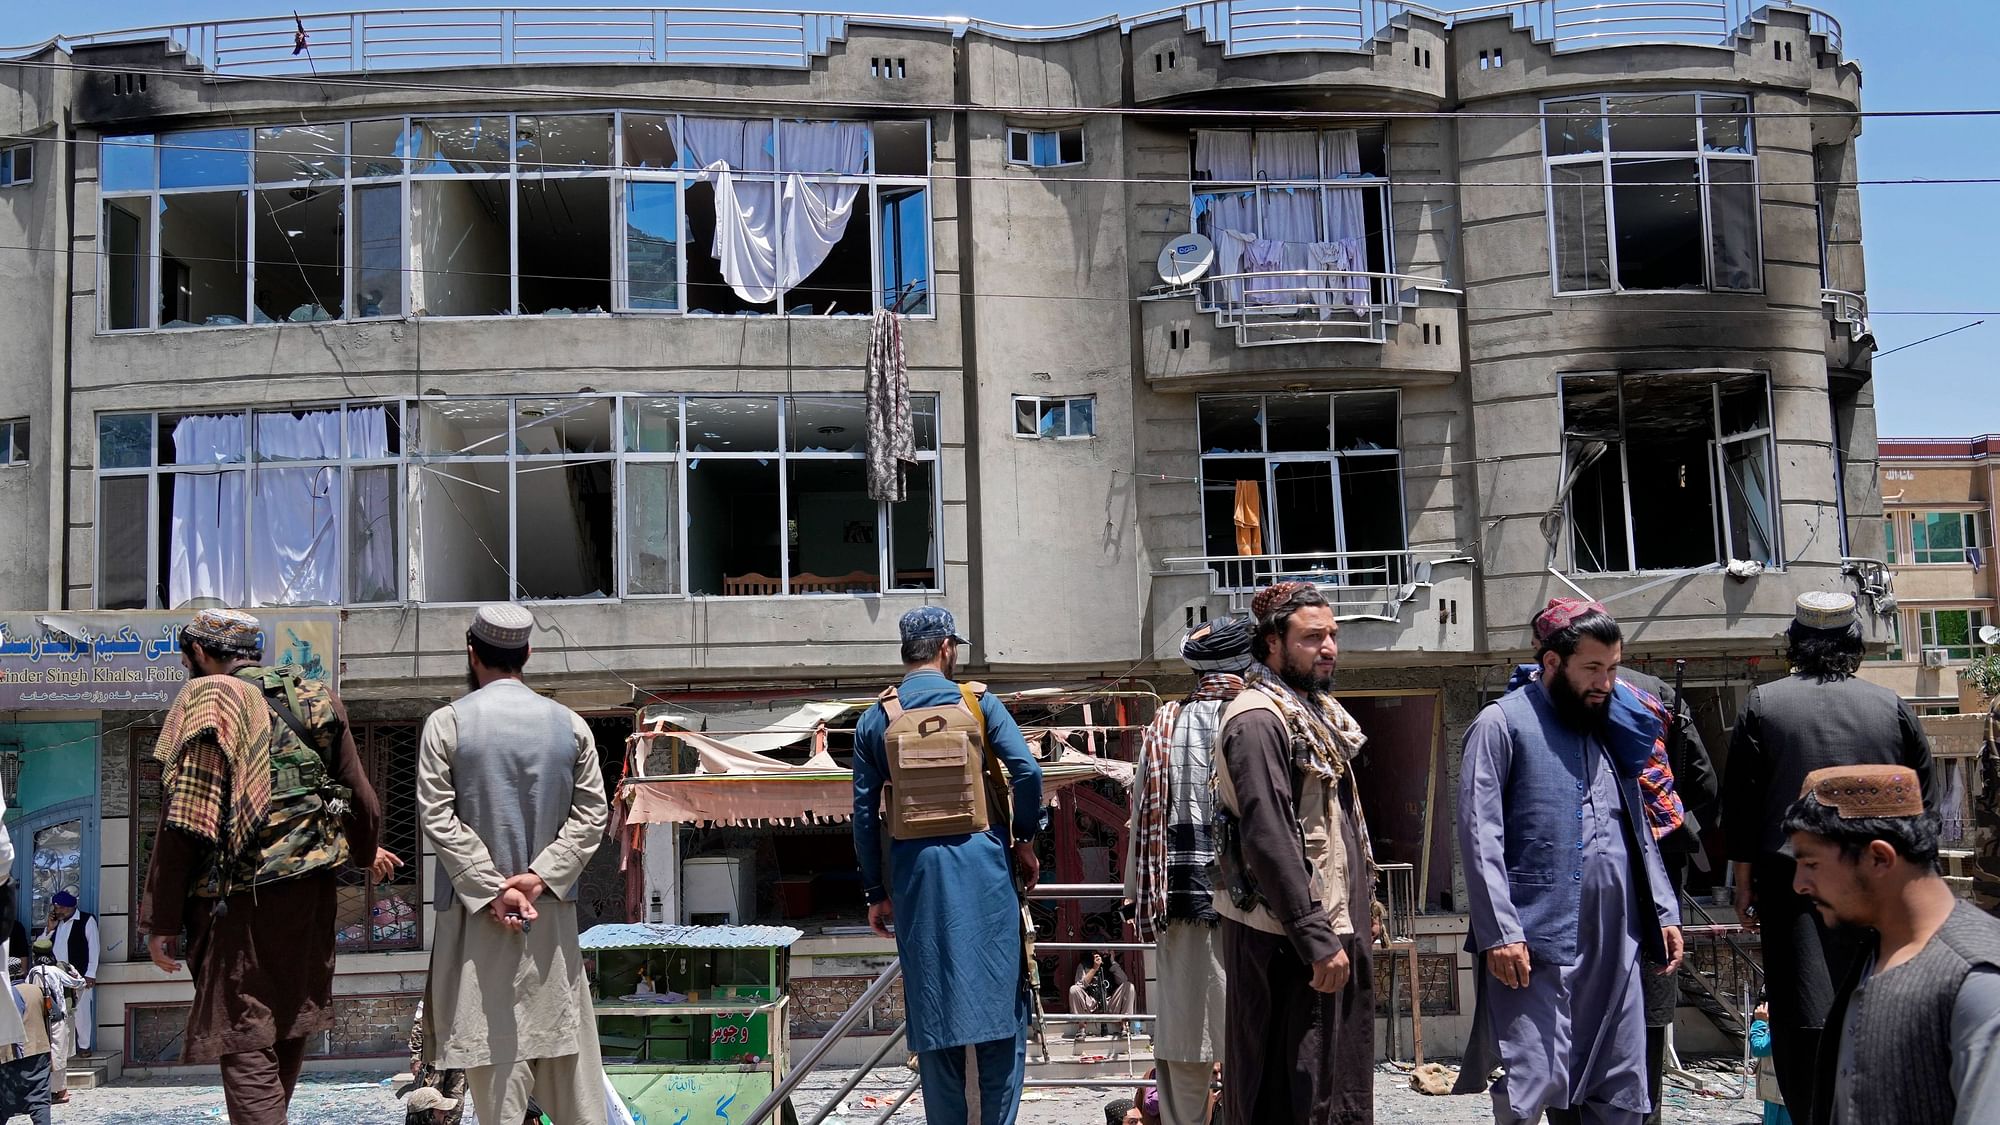 <div class="paragraphs"><p>A group of unidentified gunmen opened fire inside Gurdwara Karte Parwan in Kabul.</p></div>